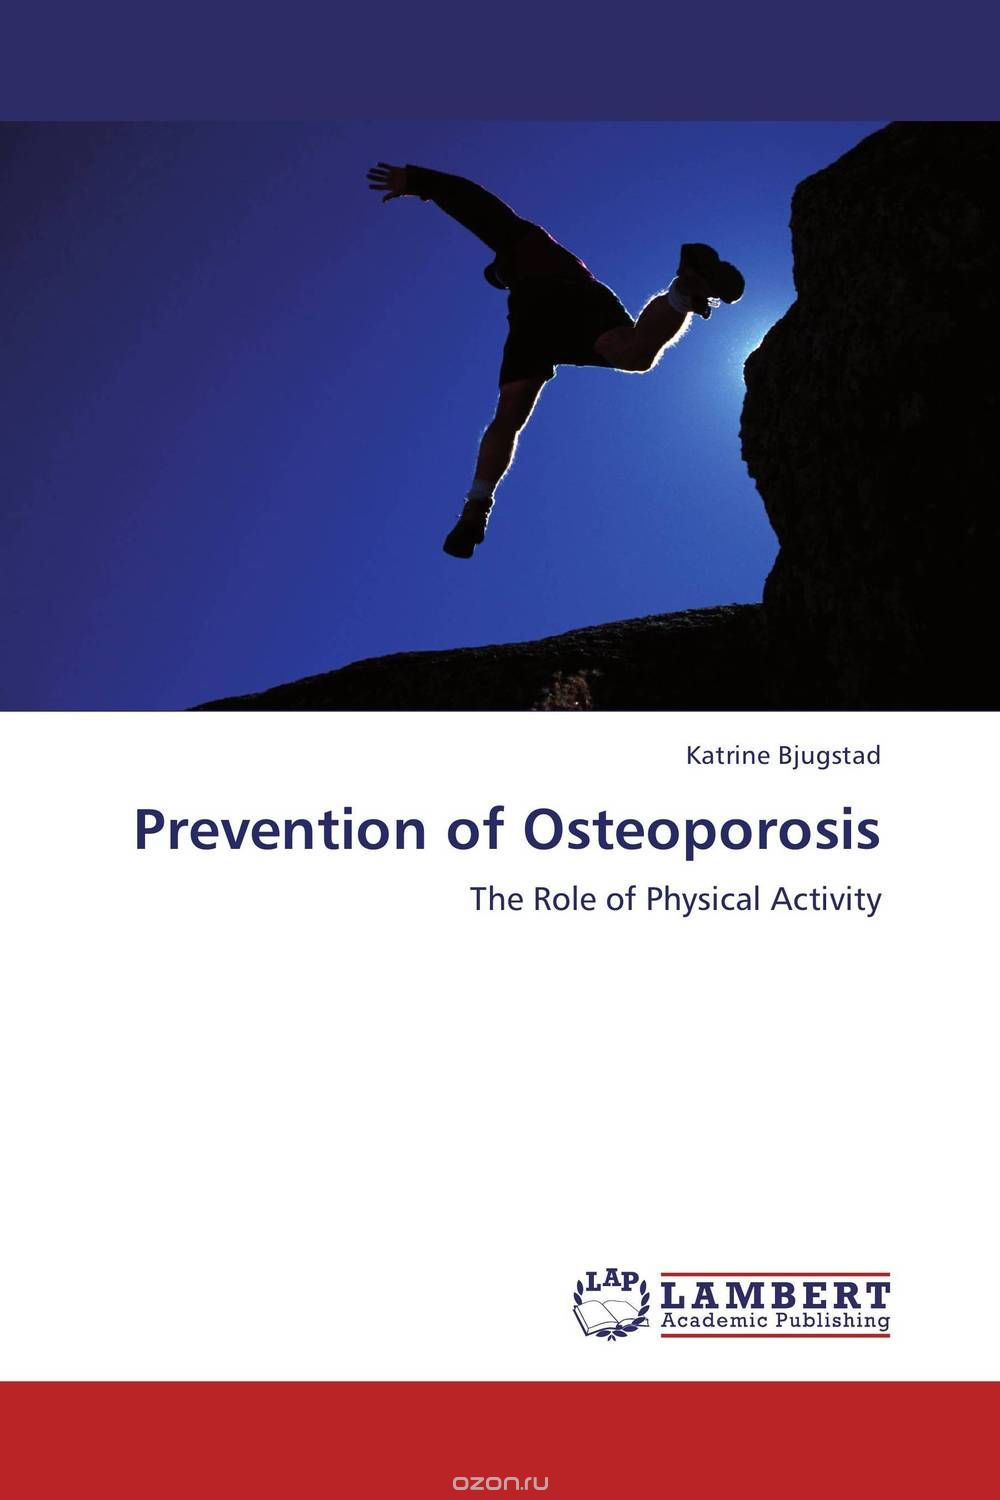 Скачать книгу "Prevention of Osteoporosis"